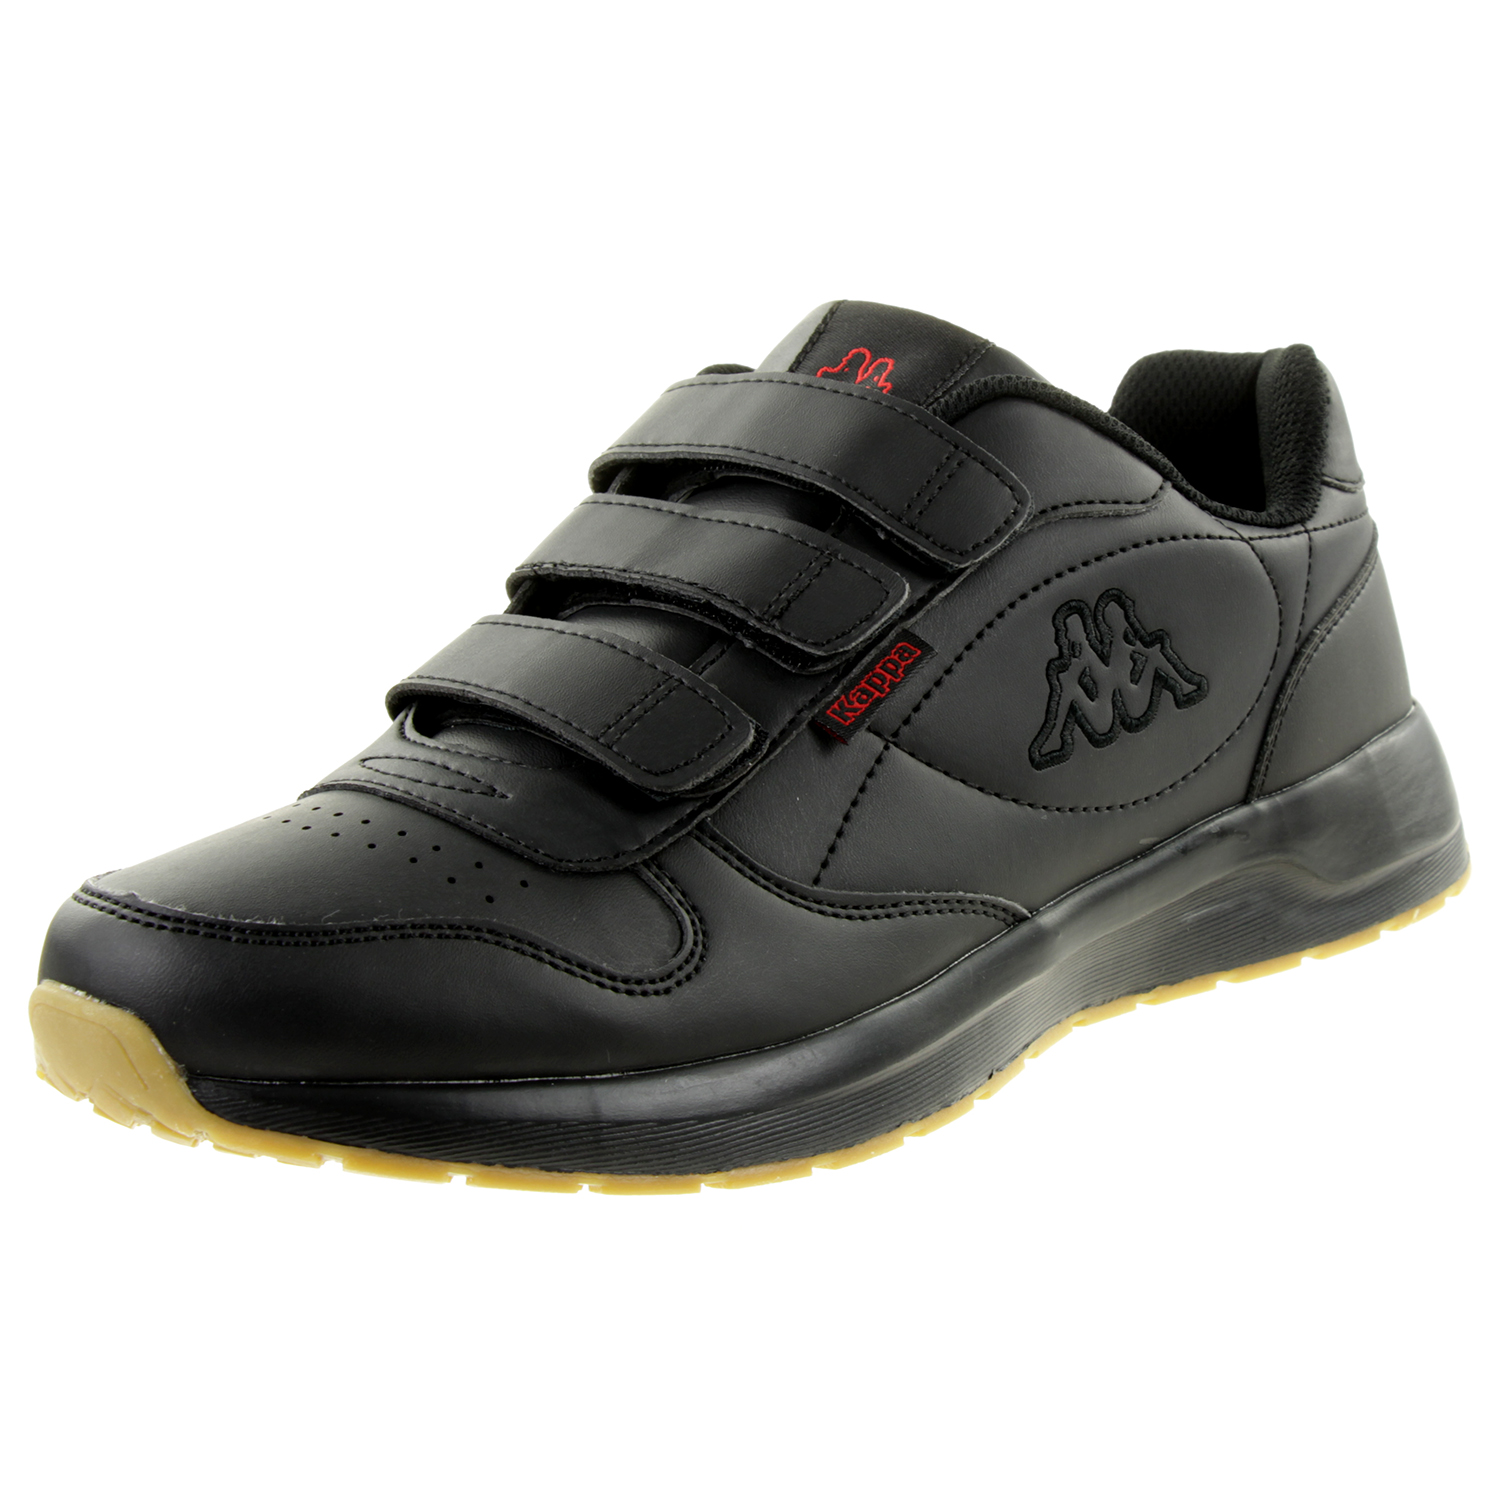 Kappa Unisex-Erwachsene Base VL Sneaker, Schwarz (Black 1111), 39 EU